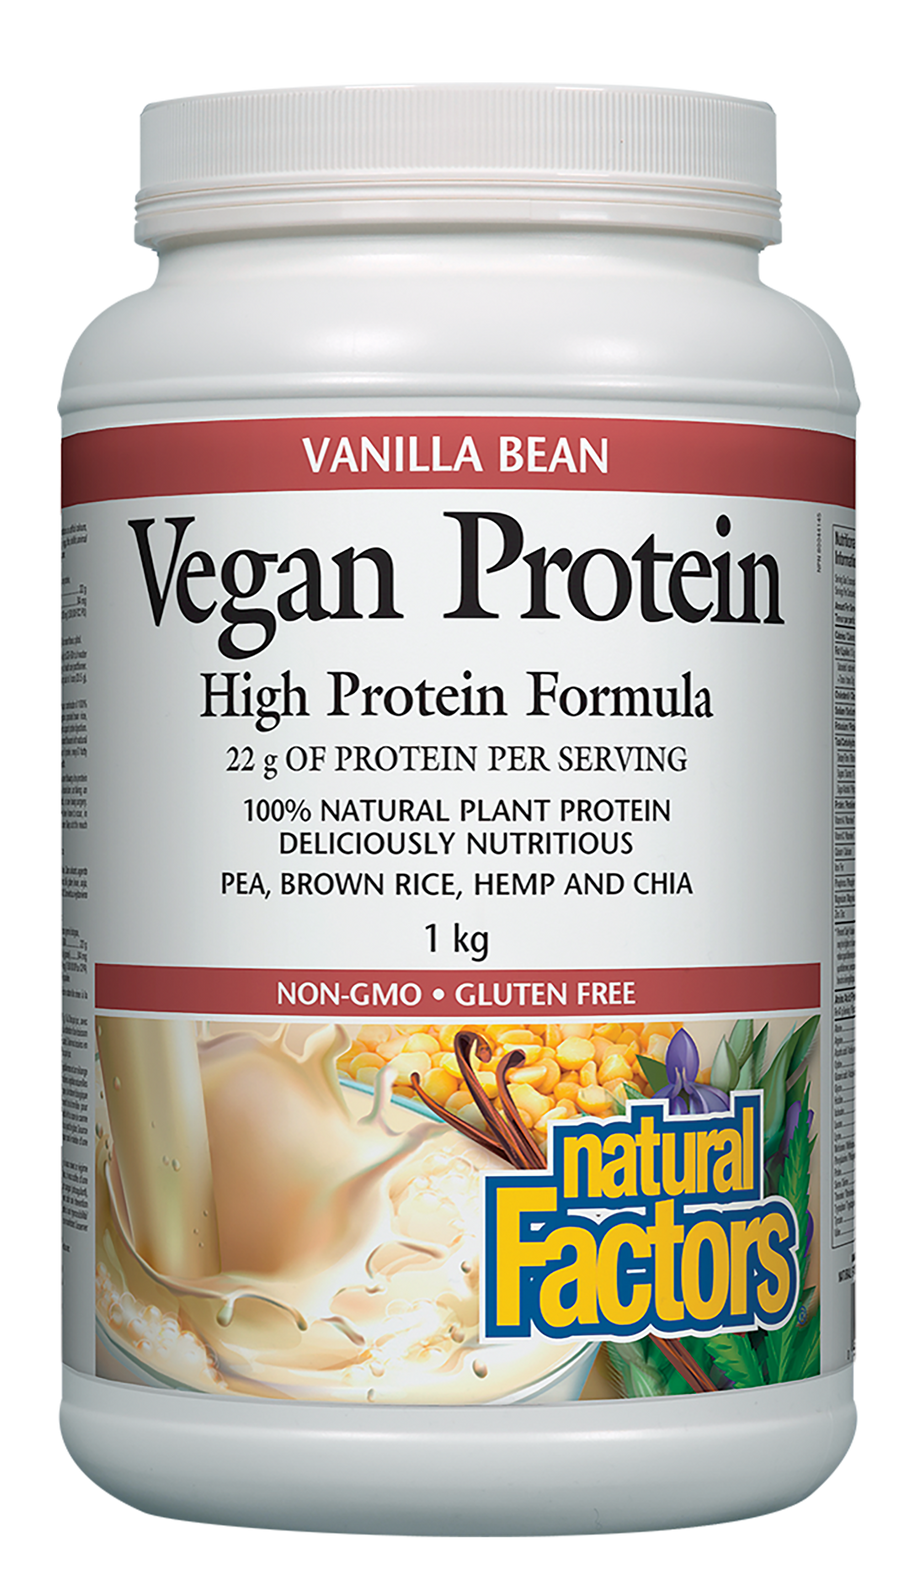 Natural Factors Vegan Protein, Vanilla Bean 1 kg Powder